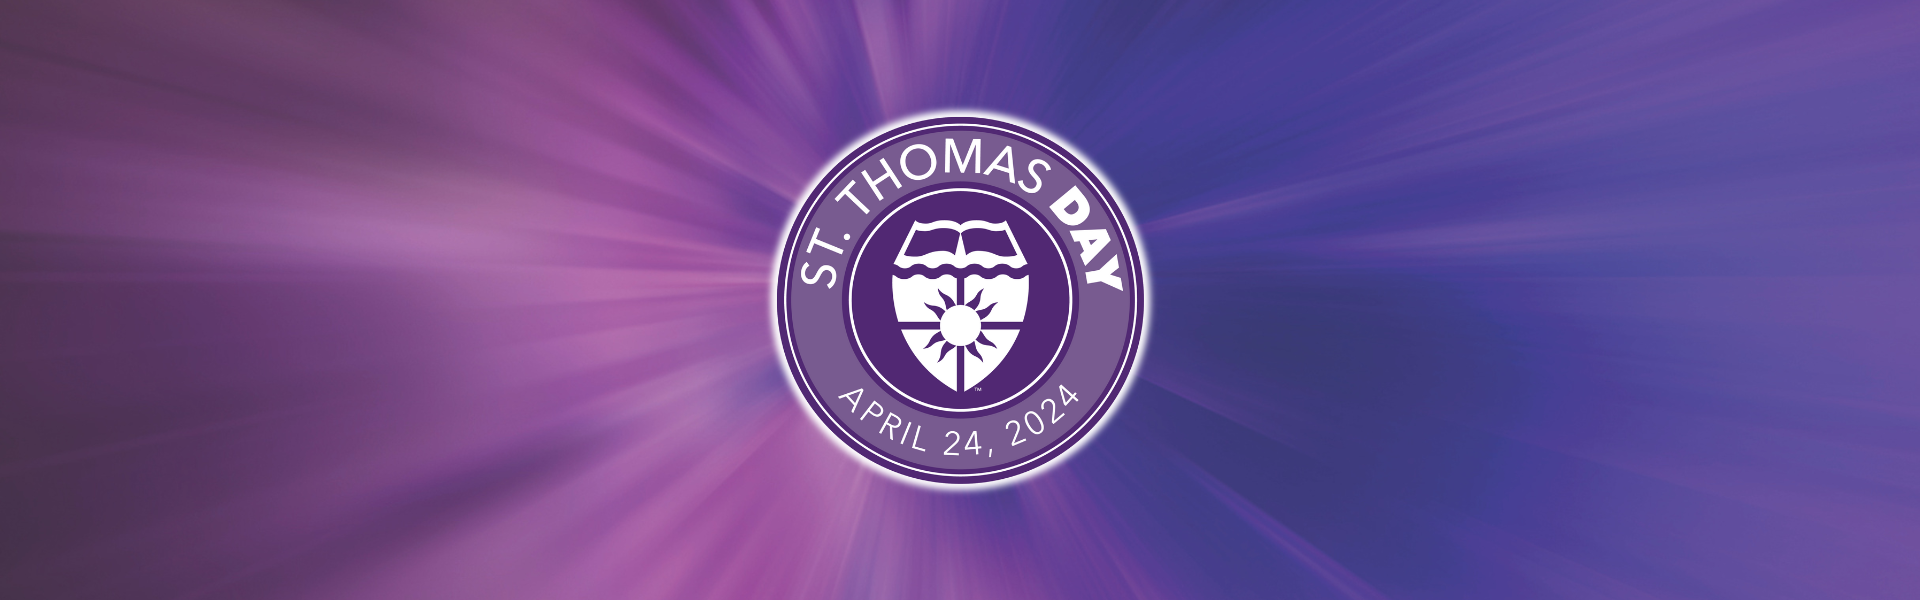 St. Thomas Day April 24, 2024